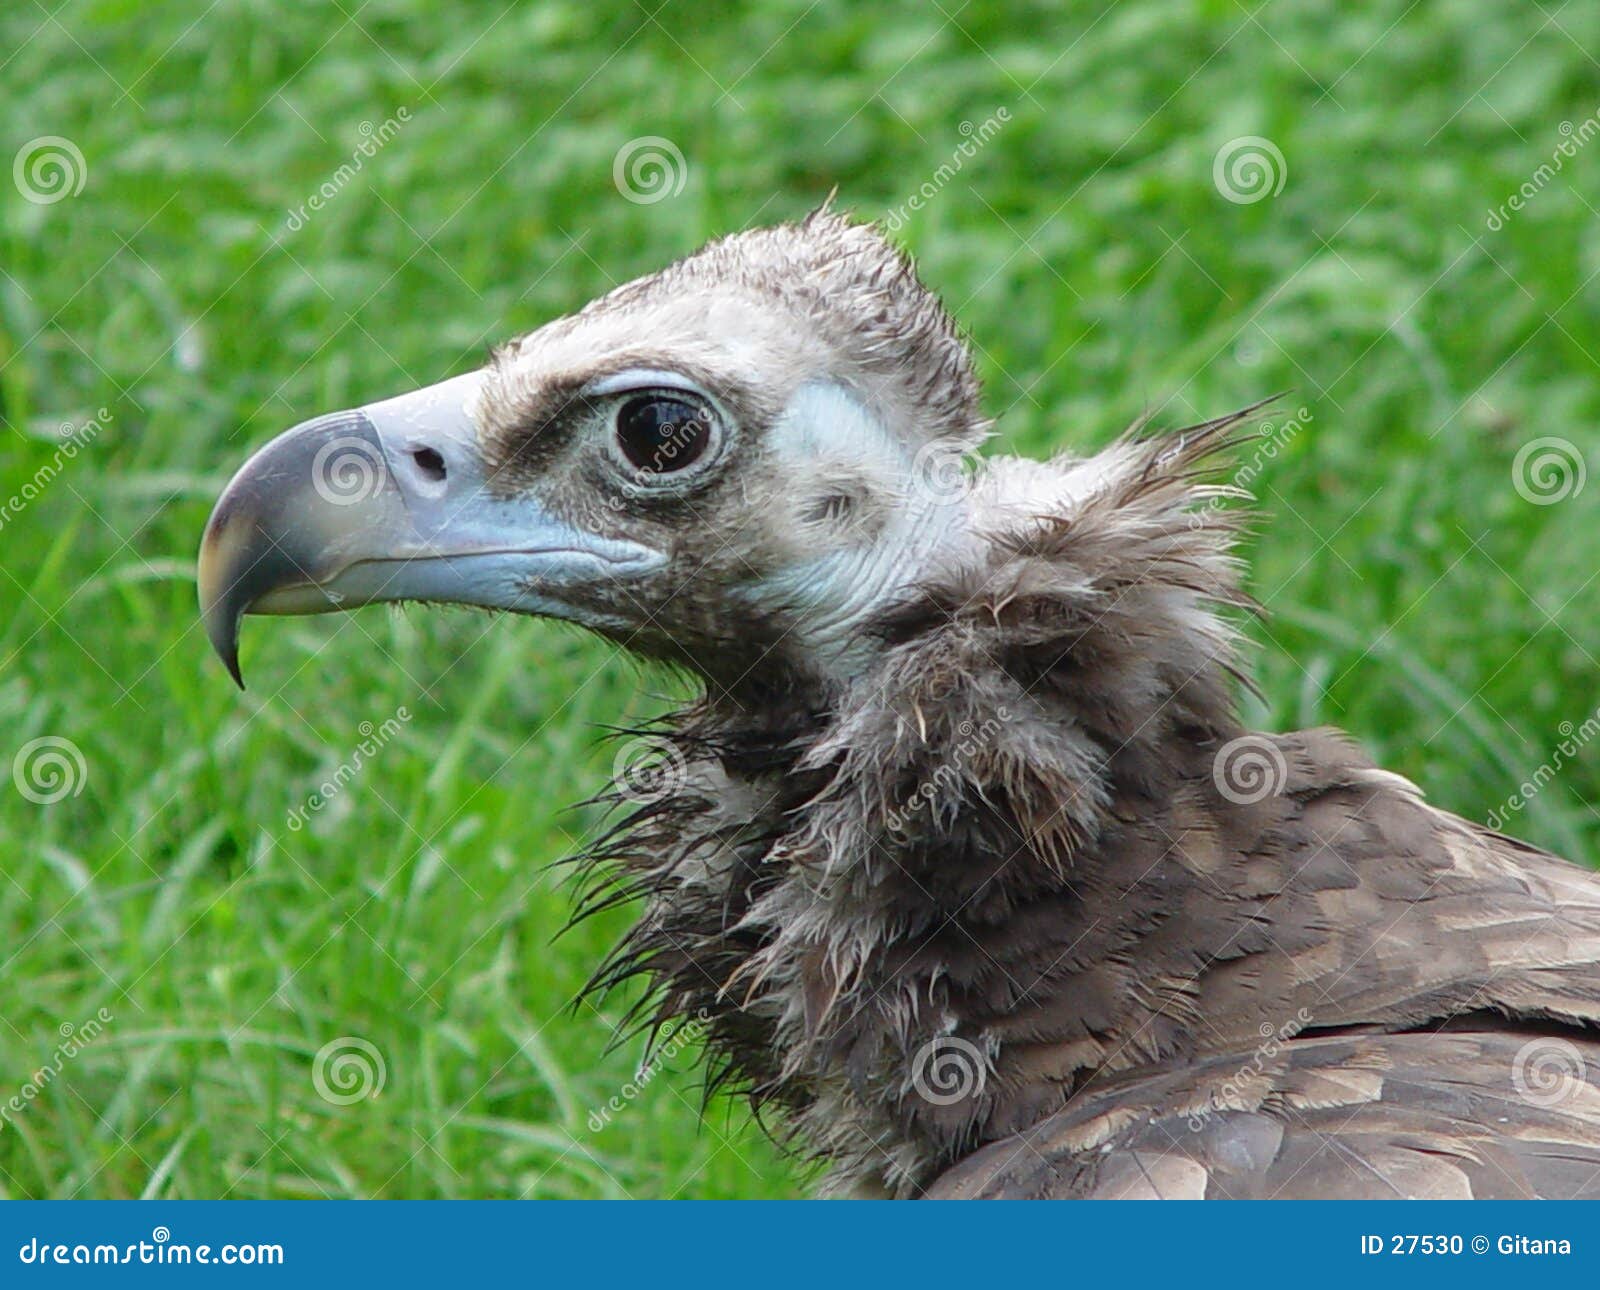 Monk vulture stock photo. Image of meat, buzzards, bird - 27530